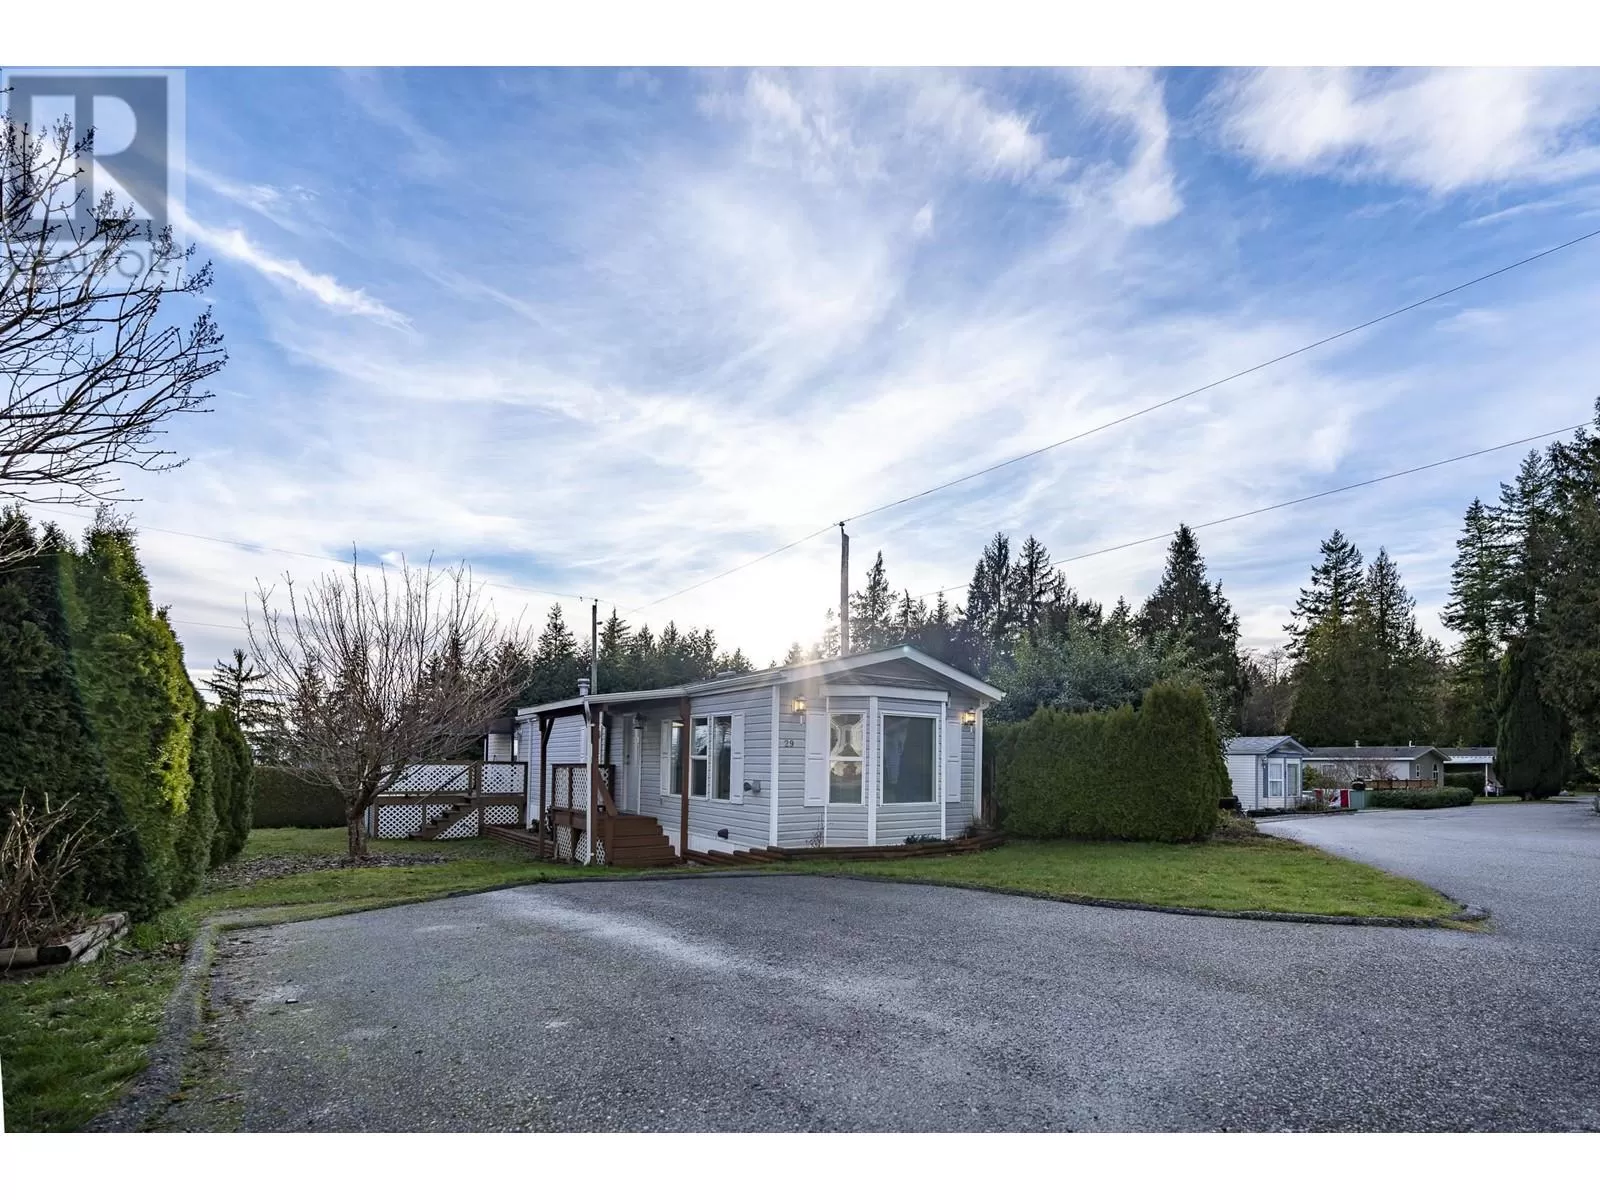 Mobile Home for rent: 29 5575 Mason Road, Sechelt, British Columbia V7Z 0K9